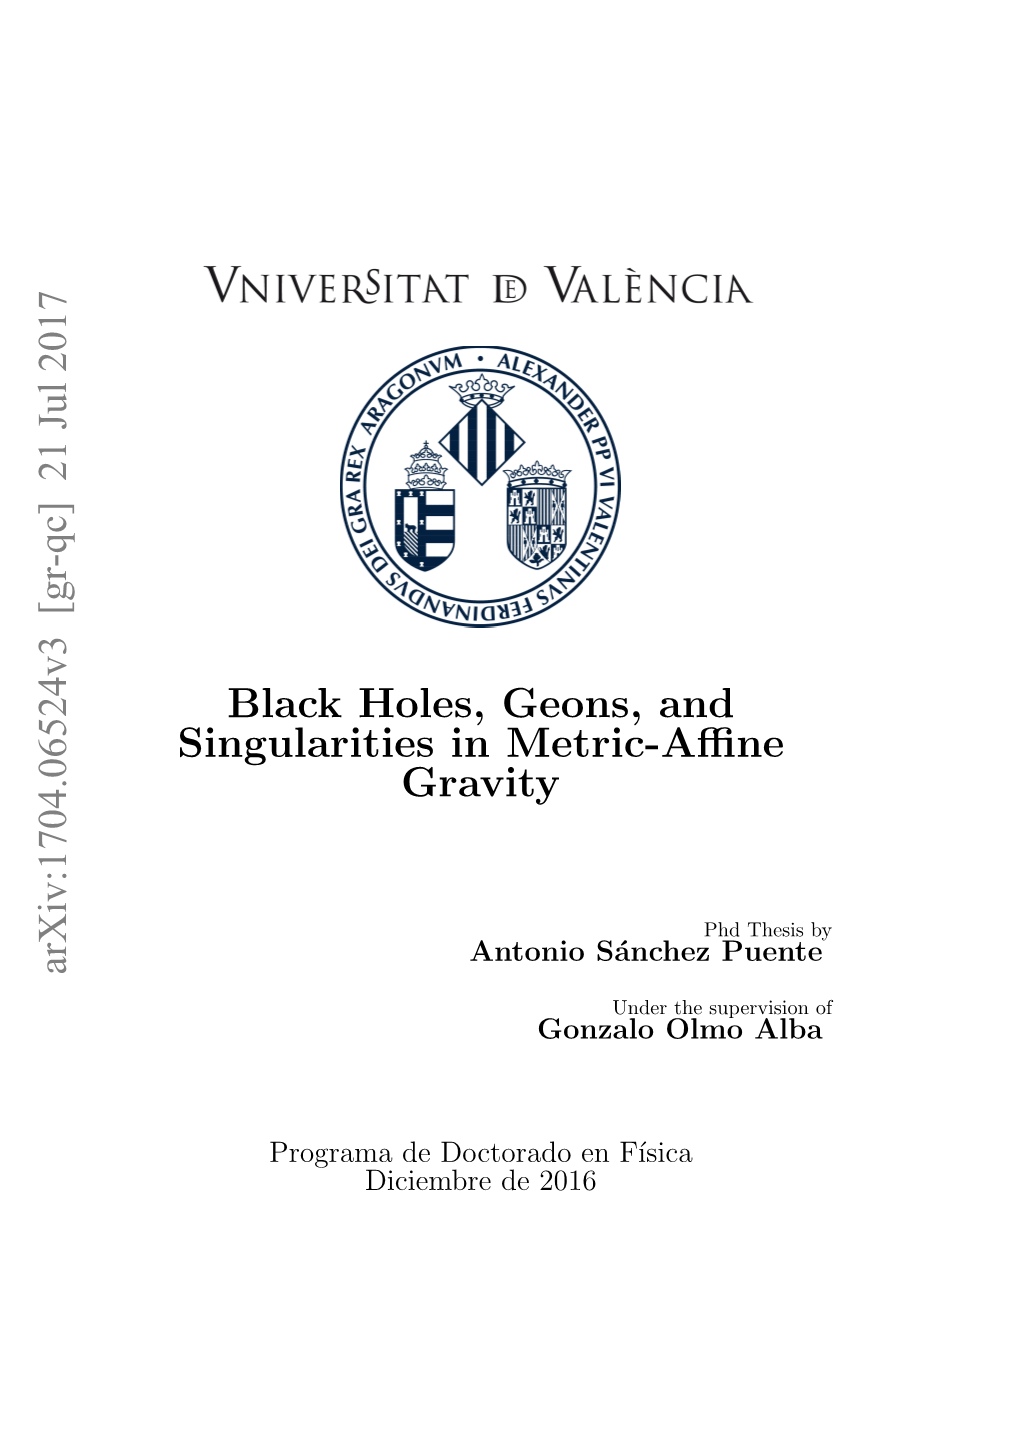 Black Holes, Geons, and Singularities in Metric-Affine Gravity Arxiv